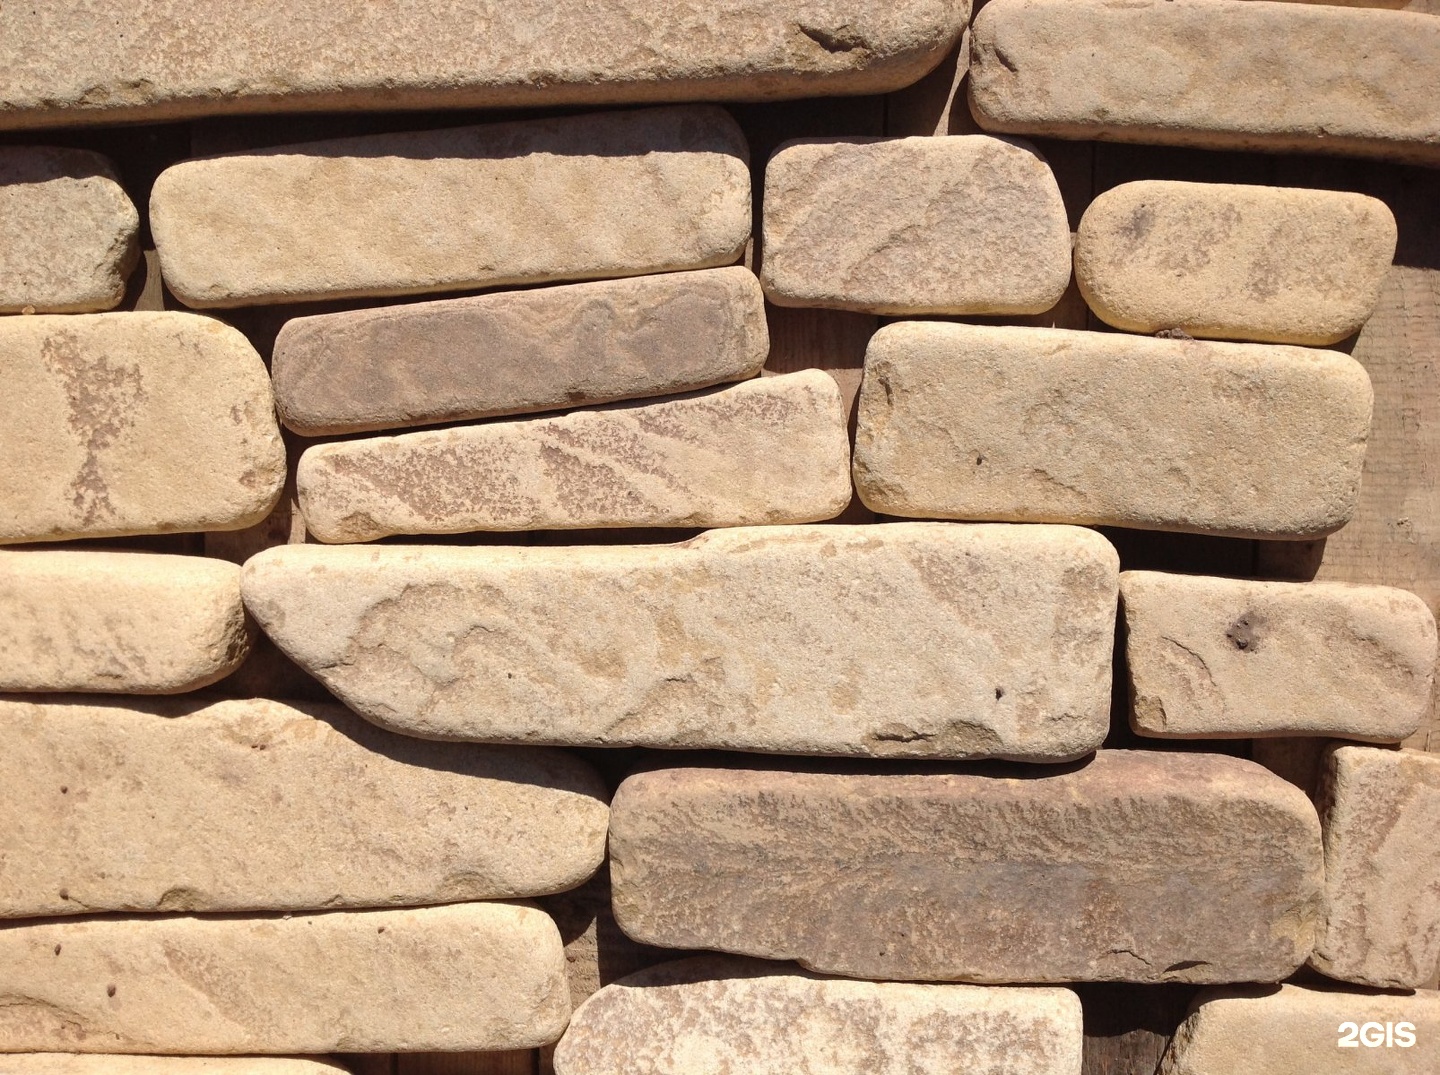 Stone material. Галтованный камень. Песчаник галтованный. Природный камень галтованный. Брусчатка песчаник галтованный.